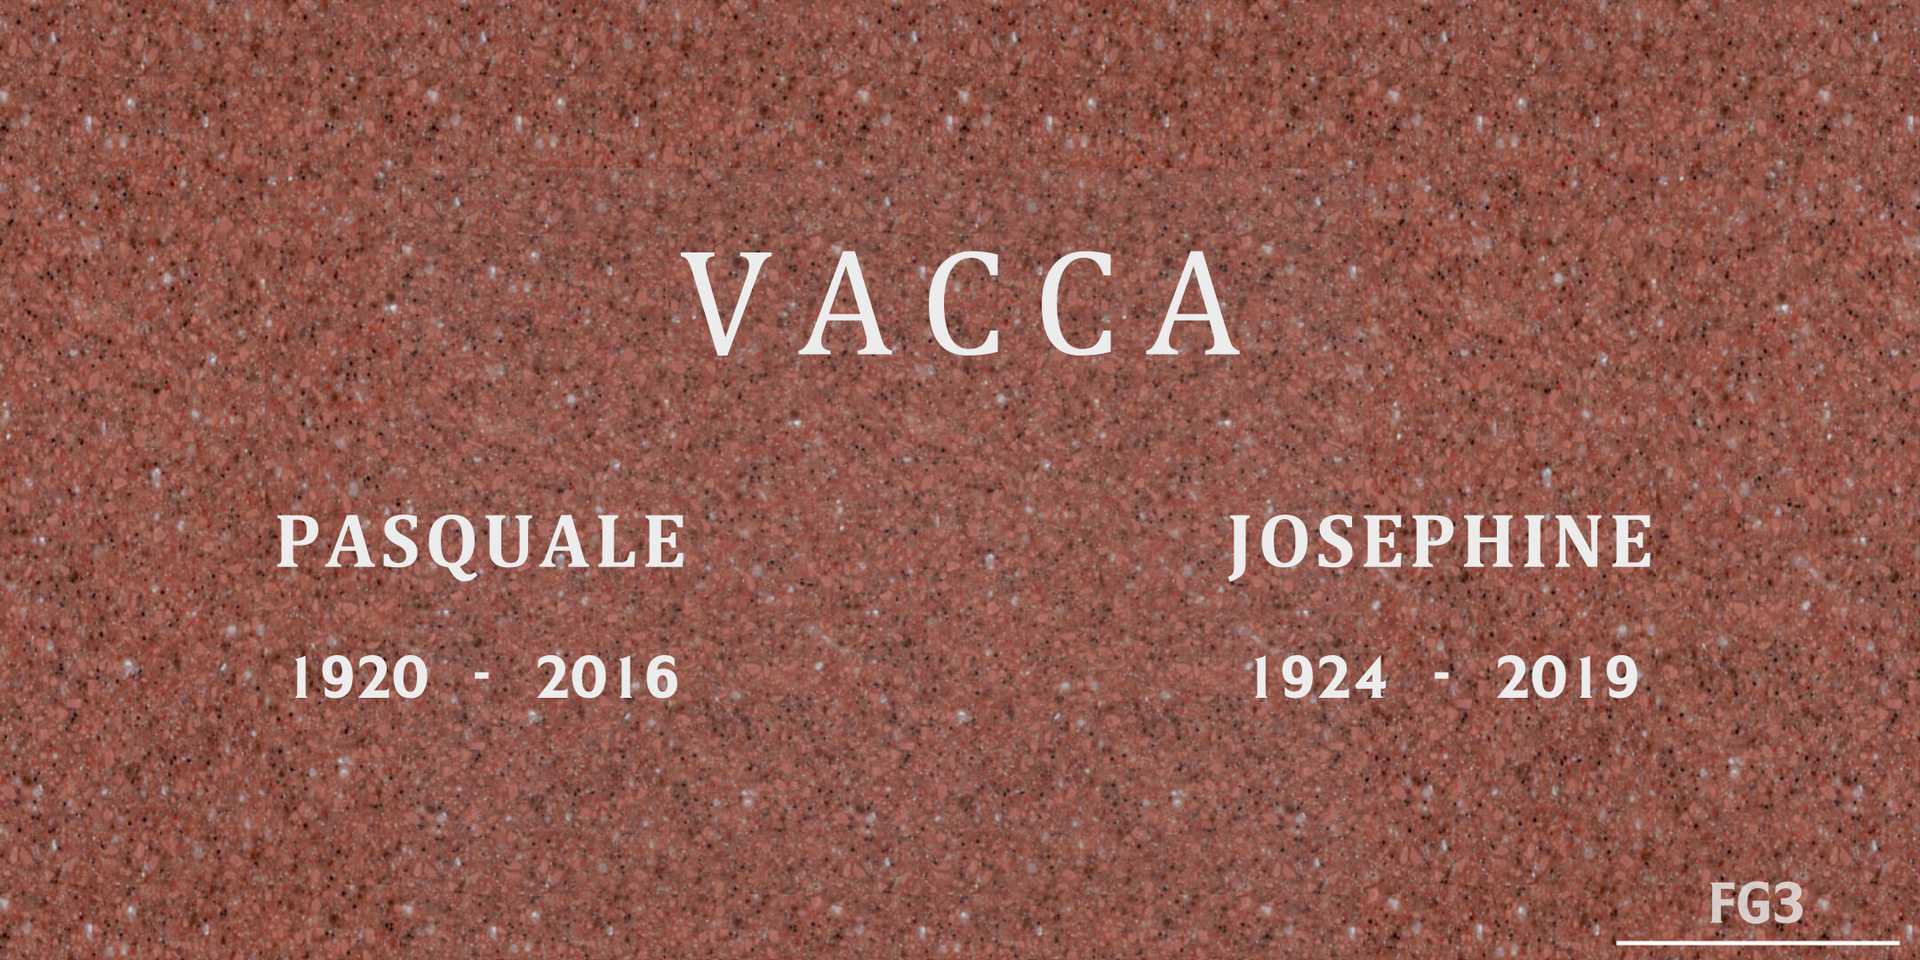 Pasquale Vacca's grave